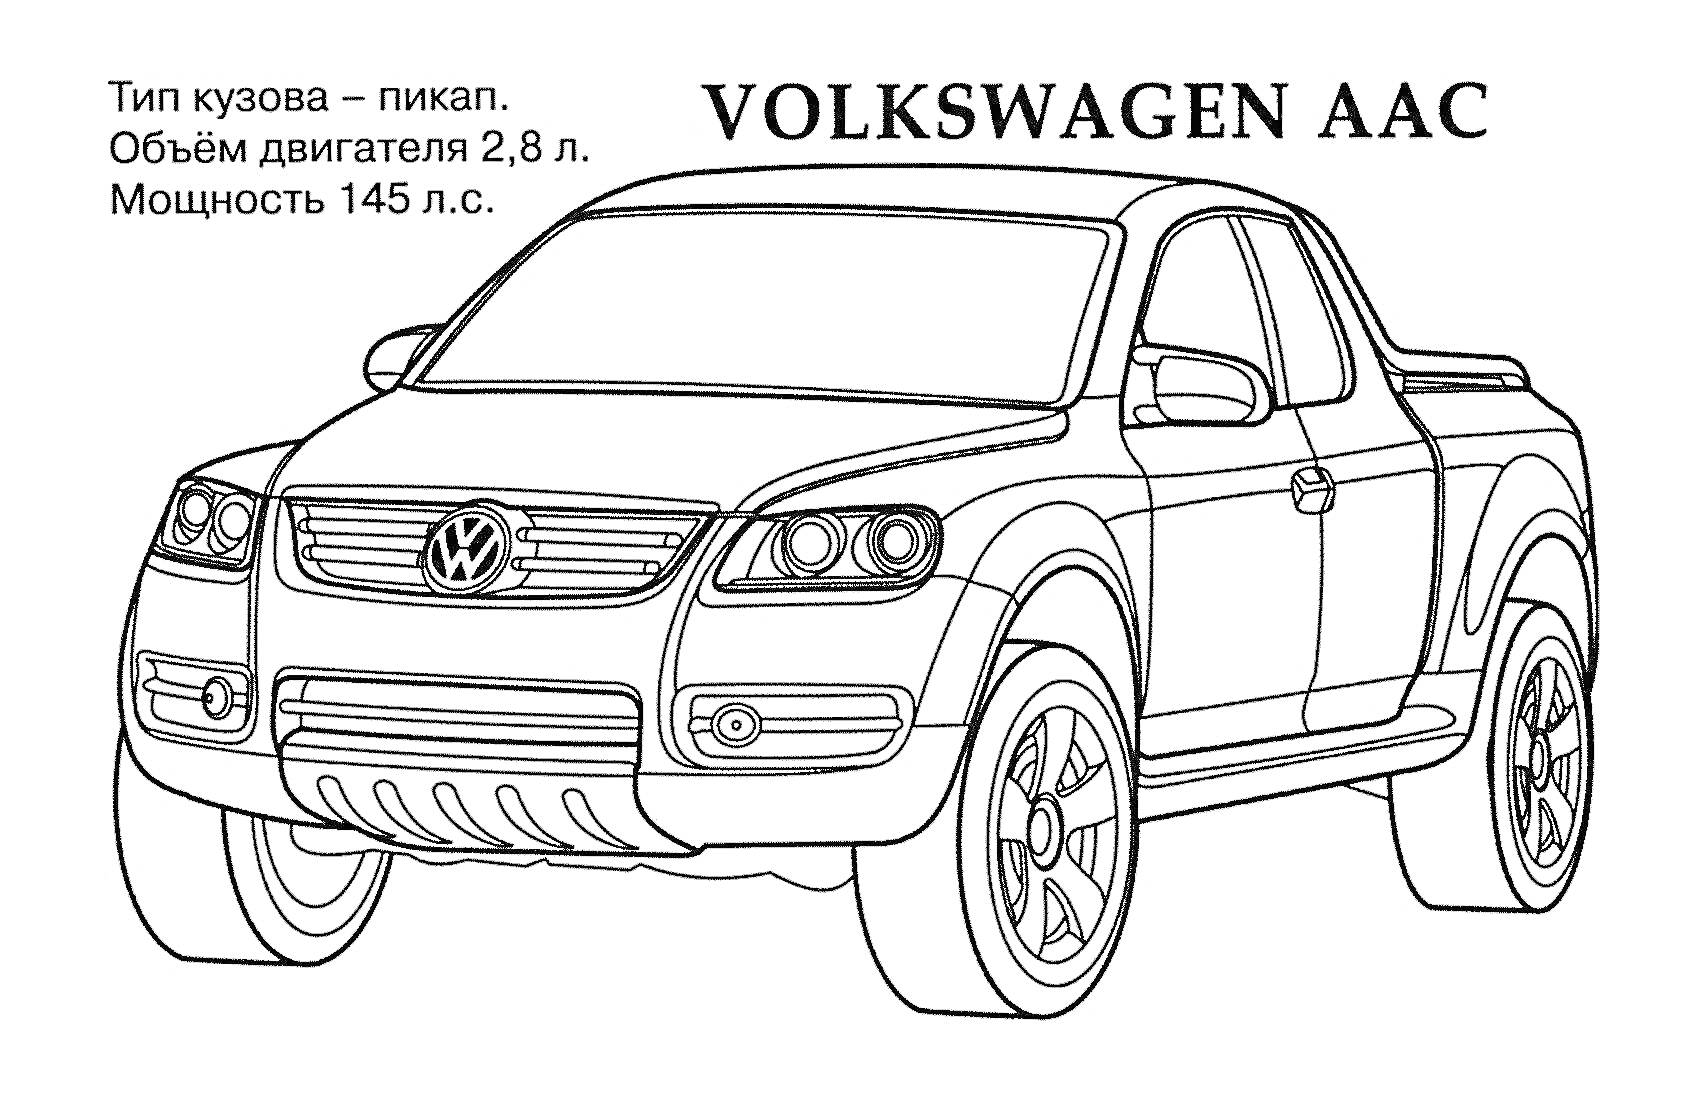 Volkswagen AAC с техническими характеристиками (тип кузова - пикап, объем двигателя 2.8 л, мощность 145 л.с.)